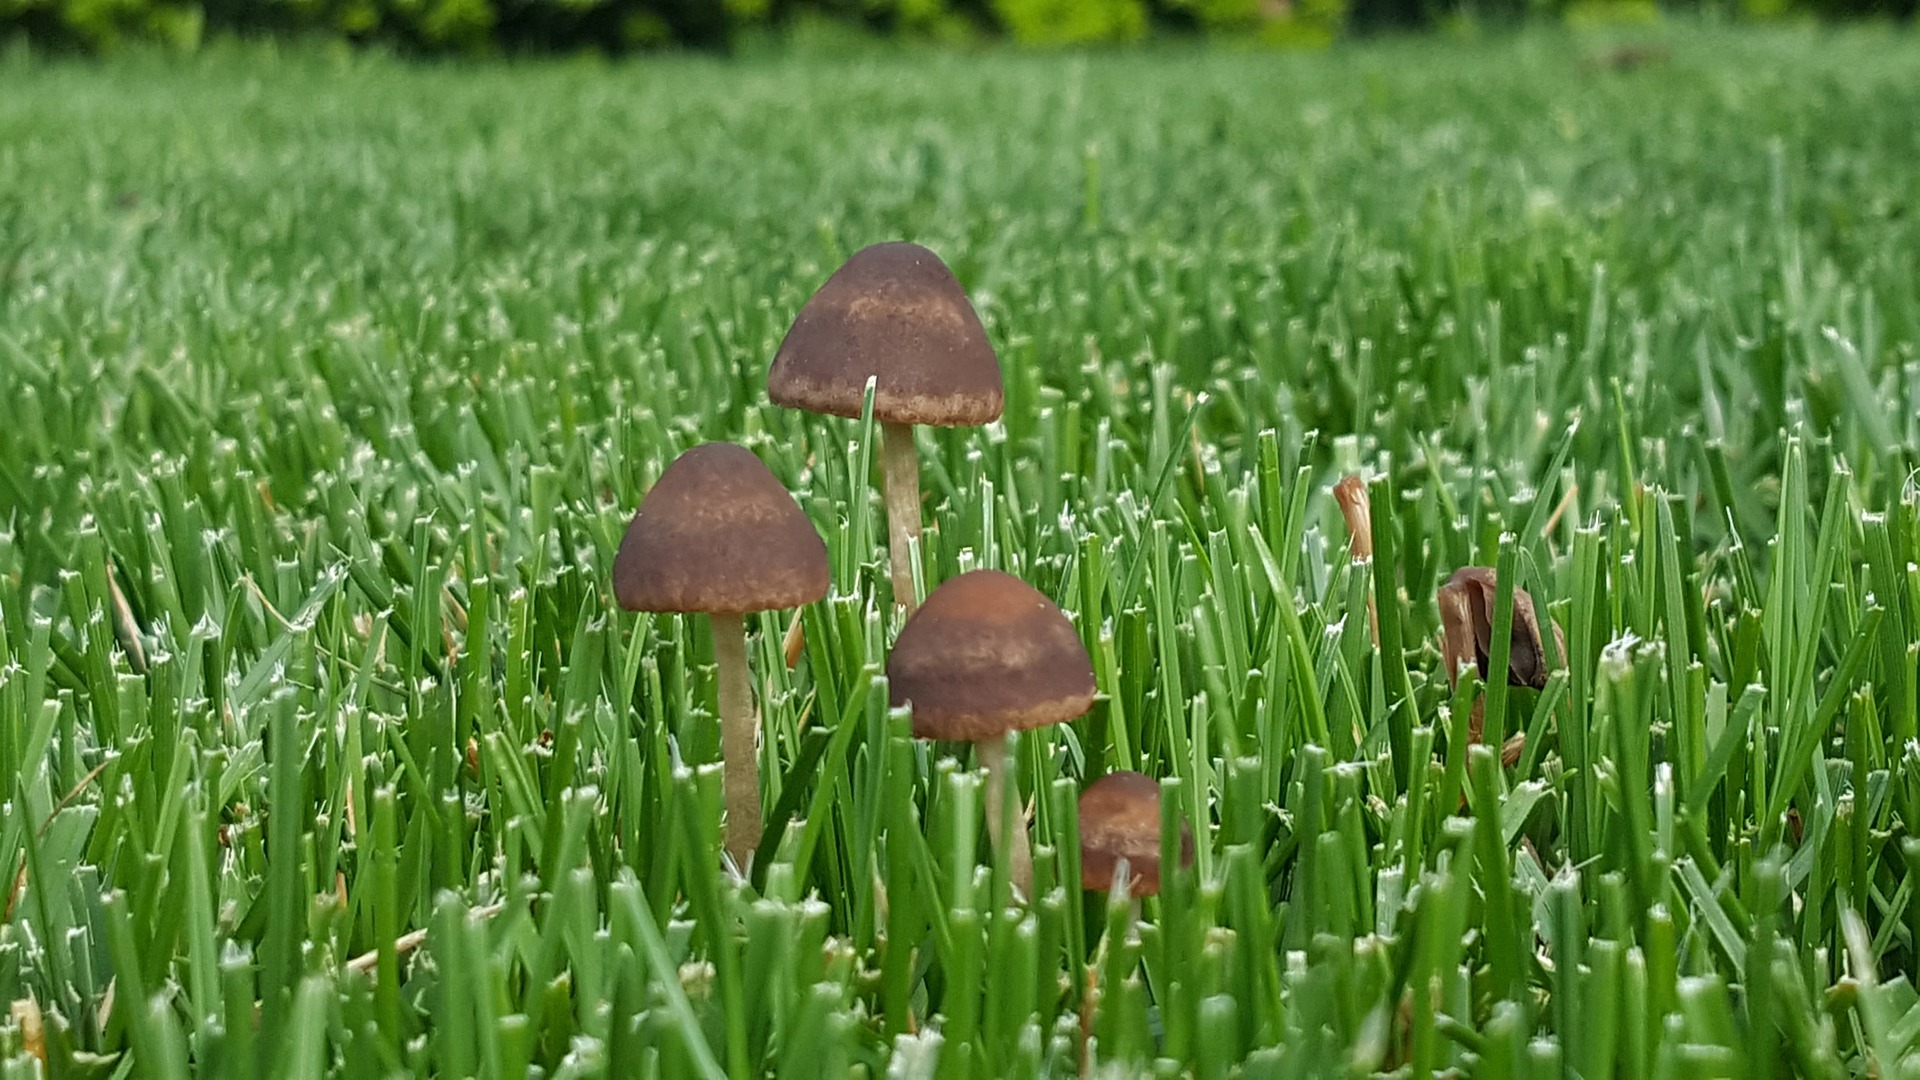 mushrooms in a lawn